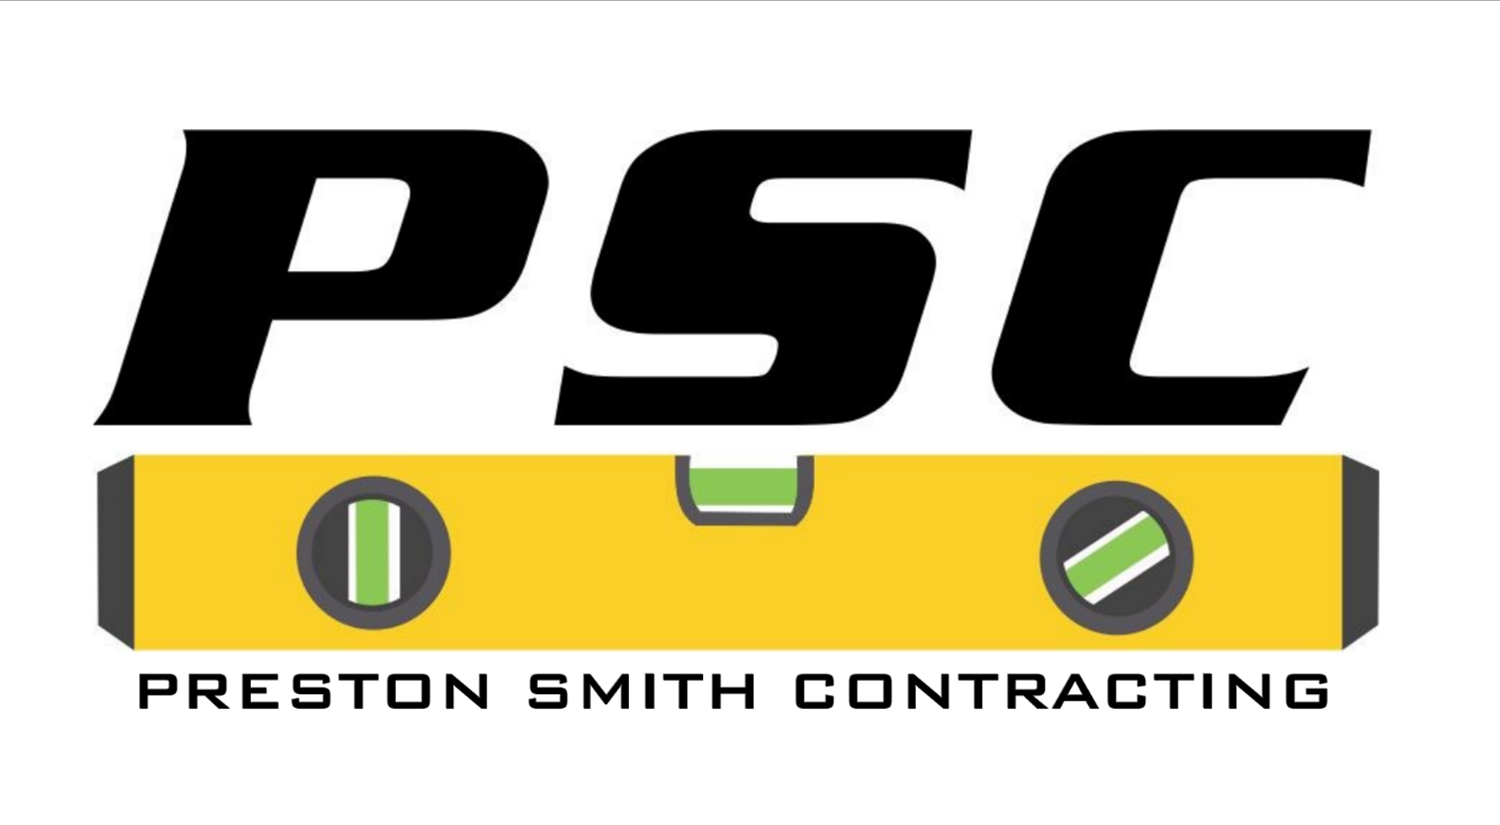 Preston Smith Contracting